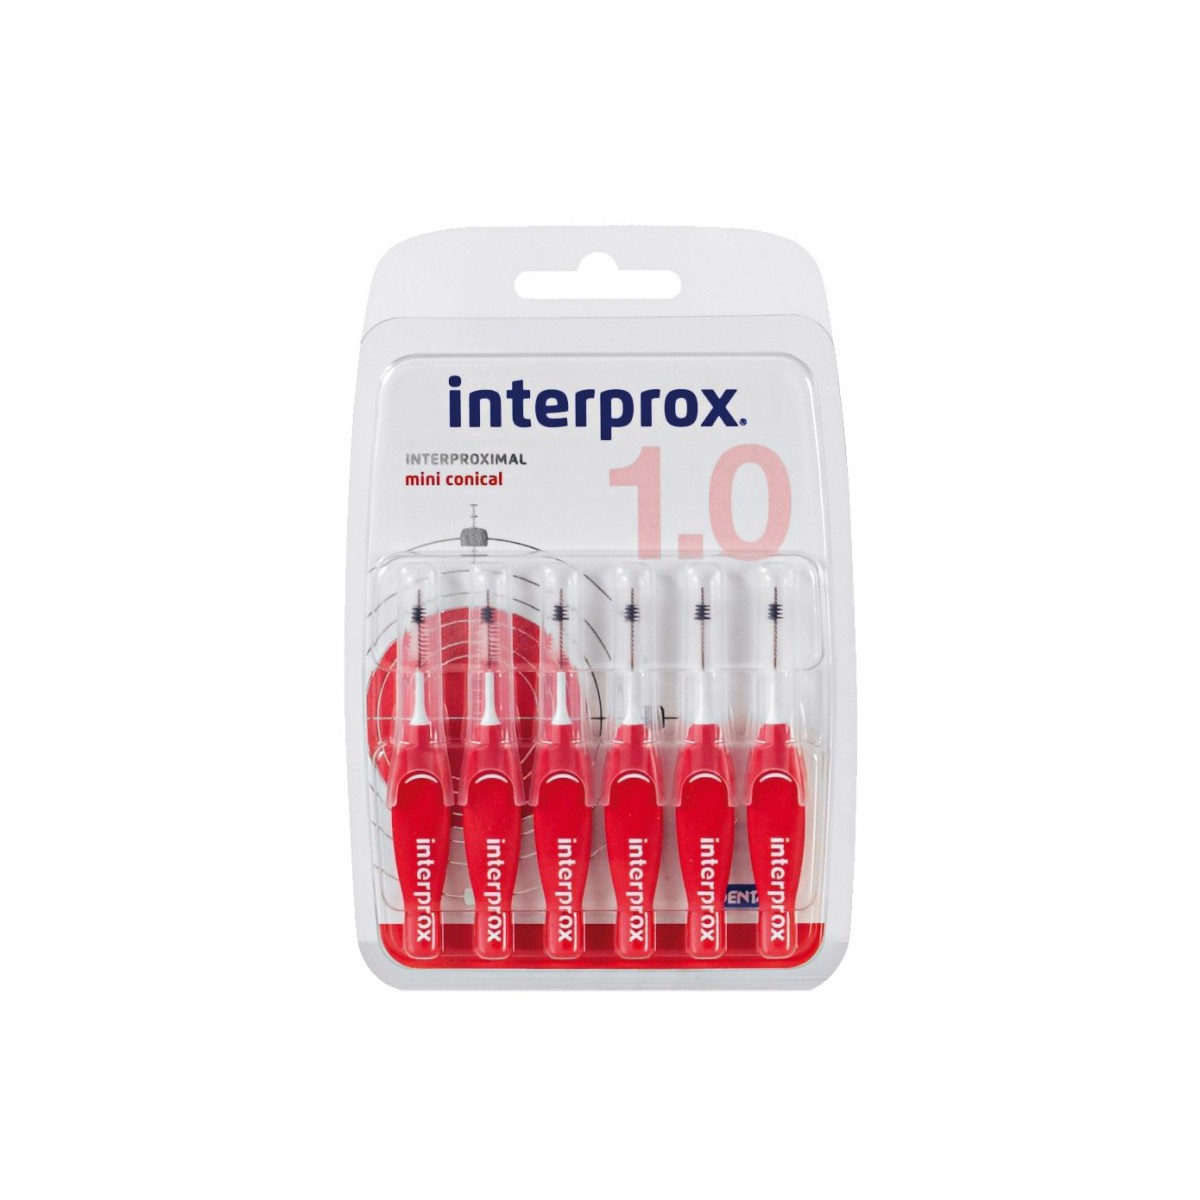 Interprox Miniconico 6 unidades